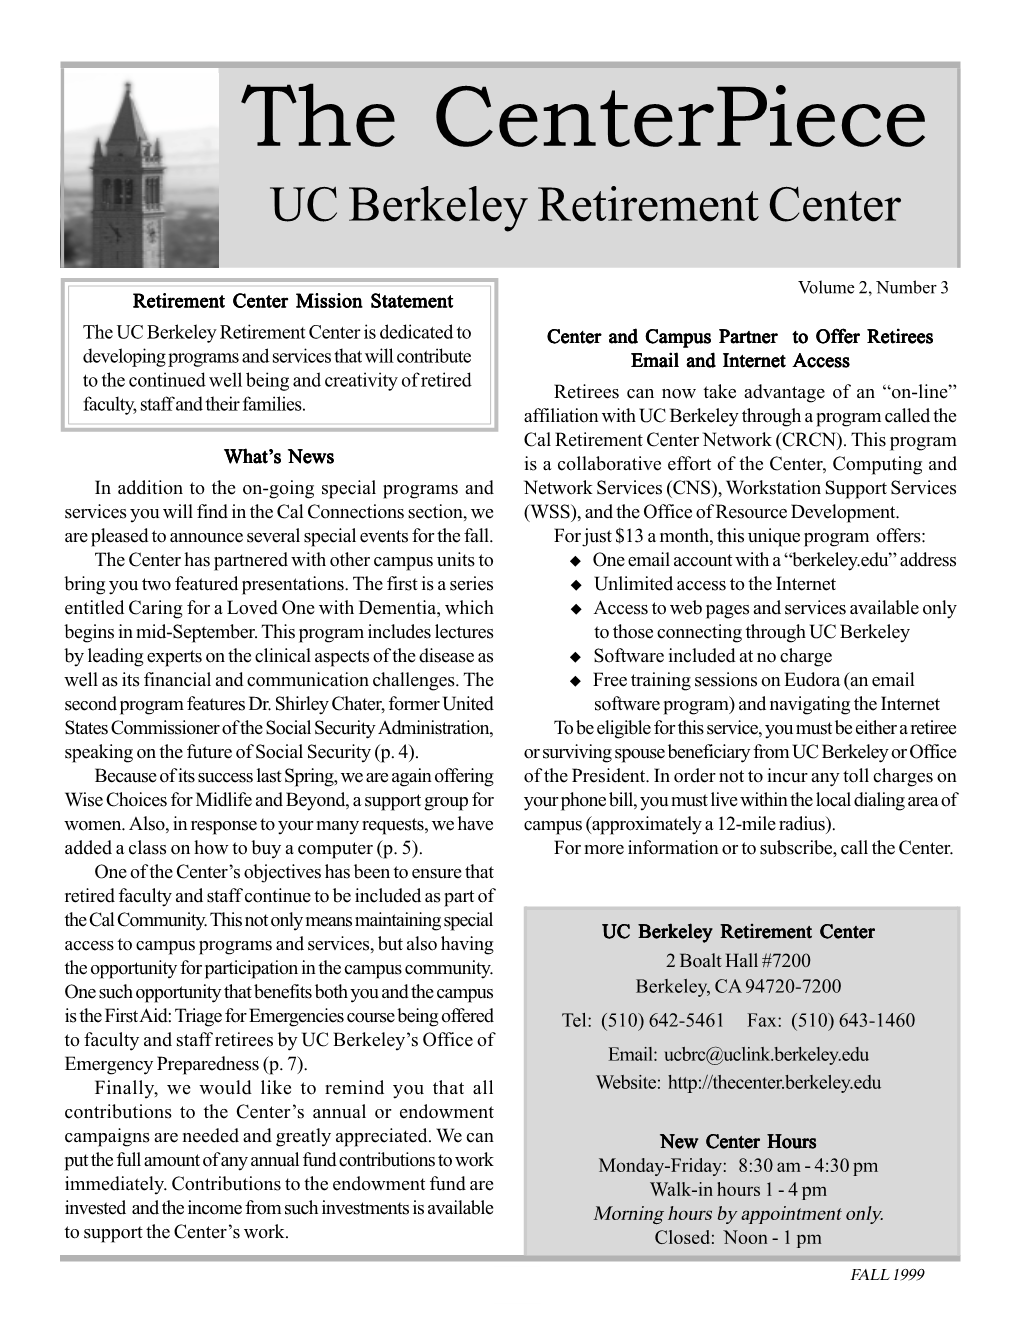 The Centerpiece UC Berkeley Retirement Center